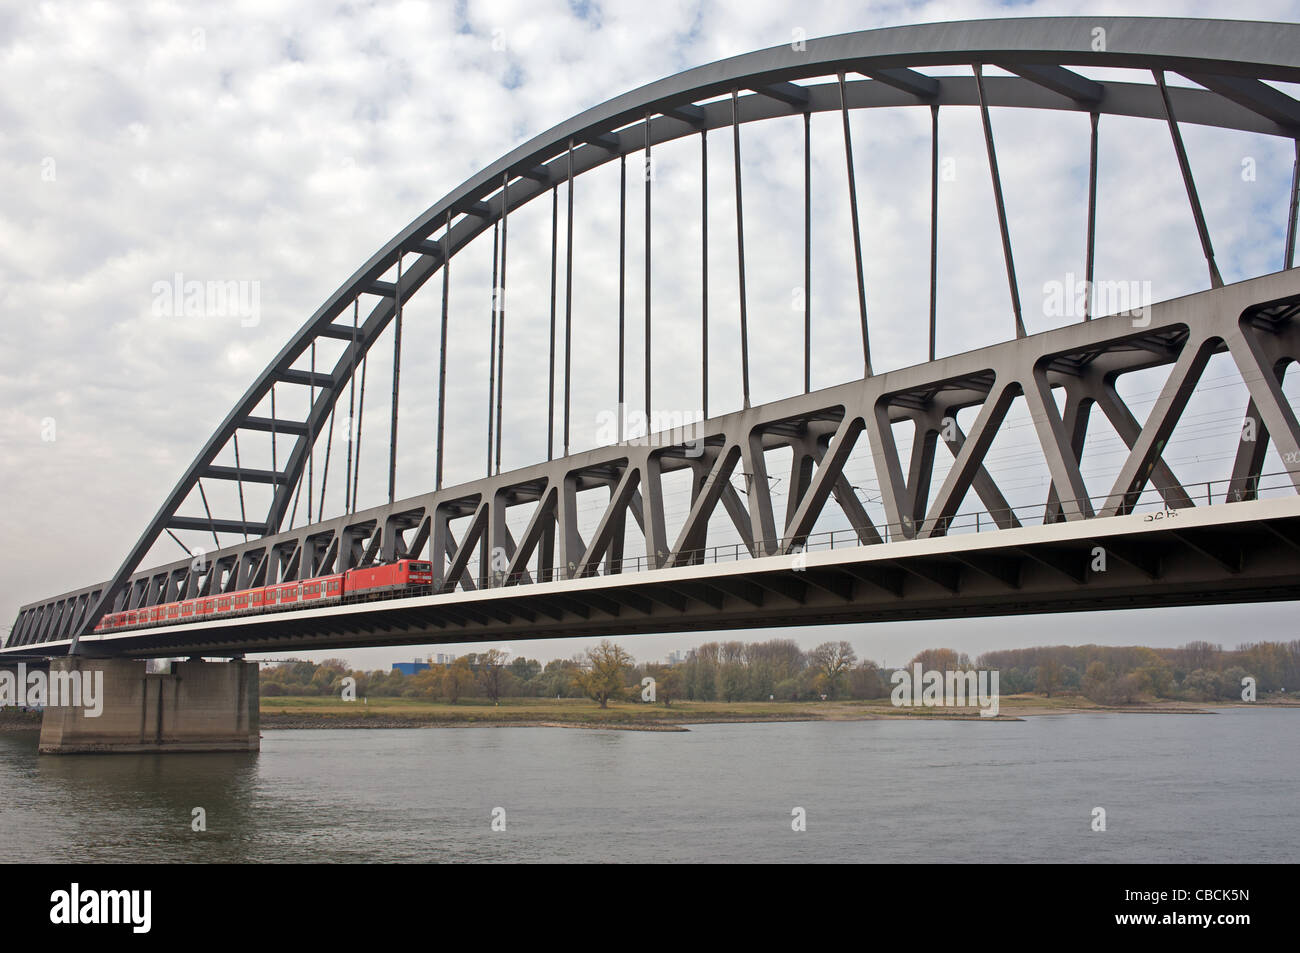 Hammer Eisenbahnbrucker railway bridge over the river Rhine, Dusseldorf,  Germany Stock Photo - Alamy